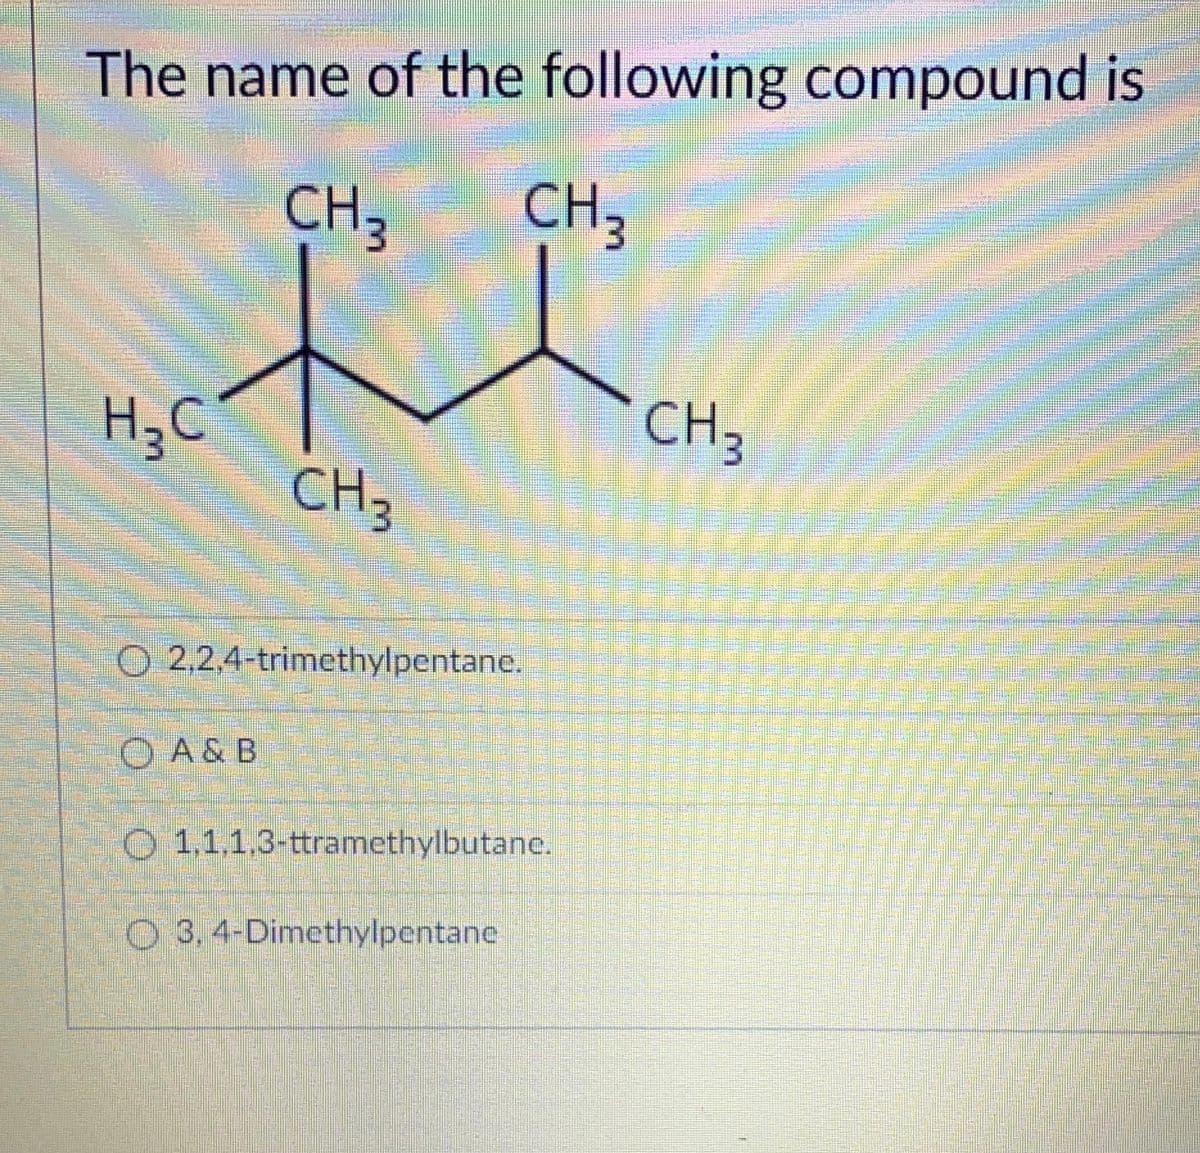 The name of the following compound is
CH3
CH,
CH3
H3C
CH3
O 2.2.4-trimethylpentane.
O A & B
O 1.1.1.3-ttramethylbutane.
O 3,4-Dimethylpentane
工
